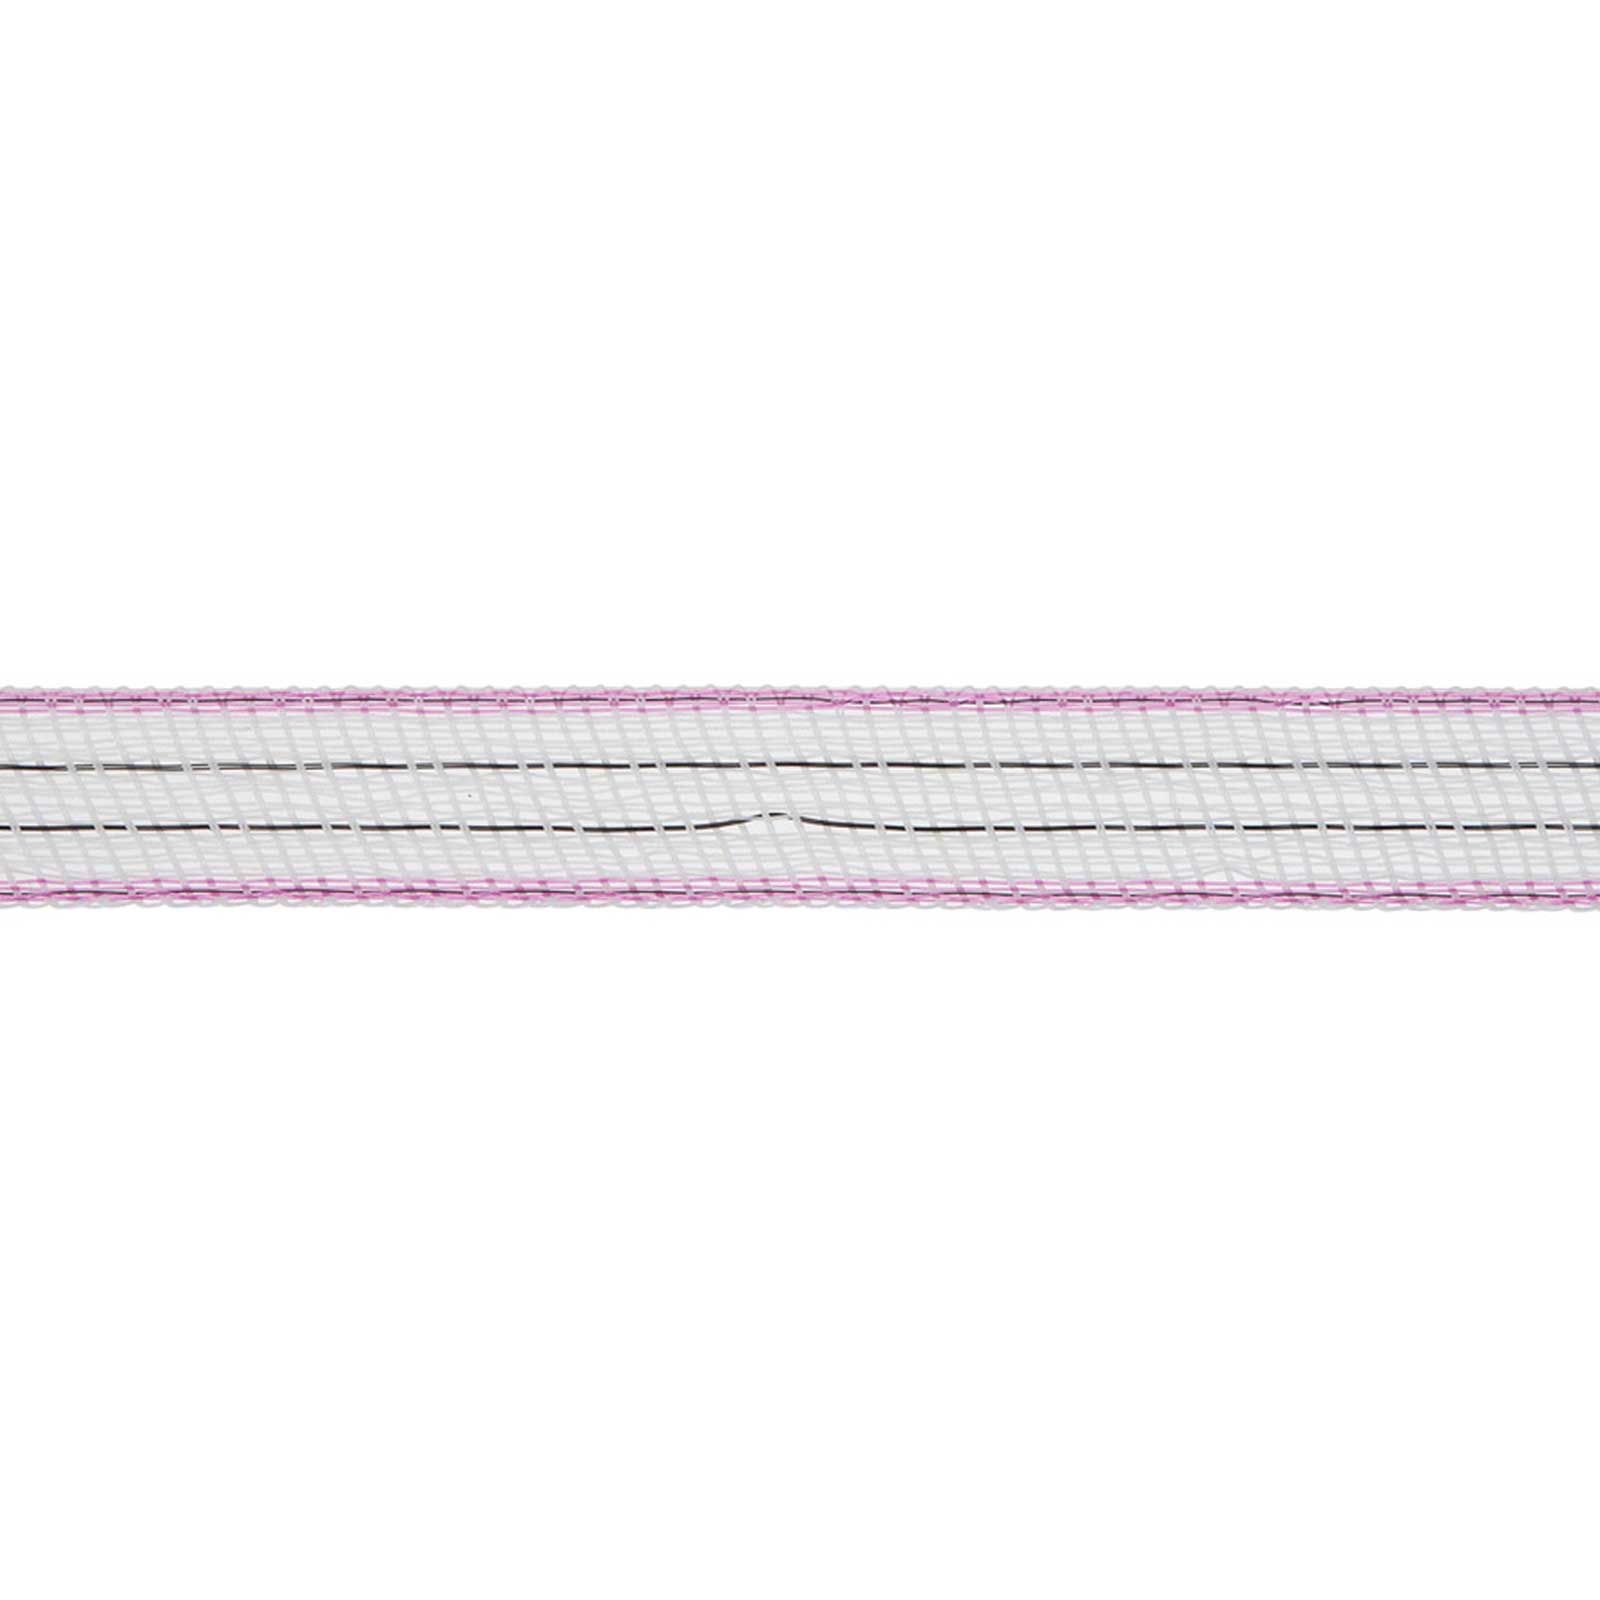 Ako Pasture Fence Tape TopLine 200m, 20mm, 6x0.25 TriCOND, white-pink